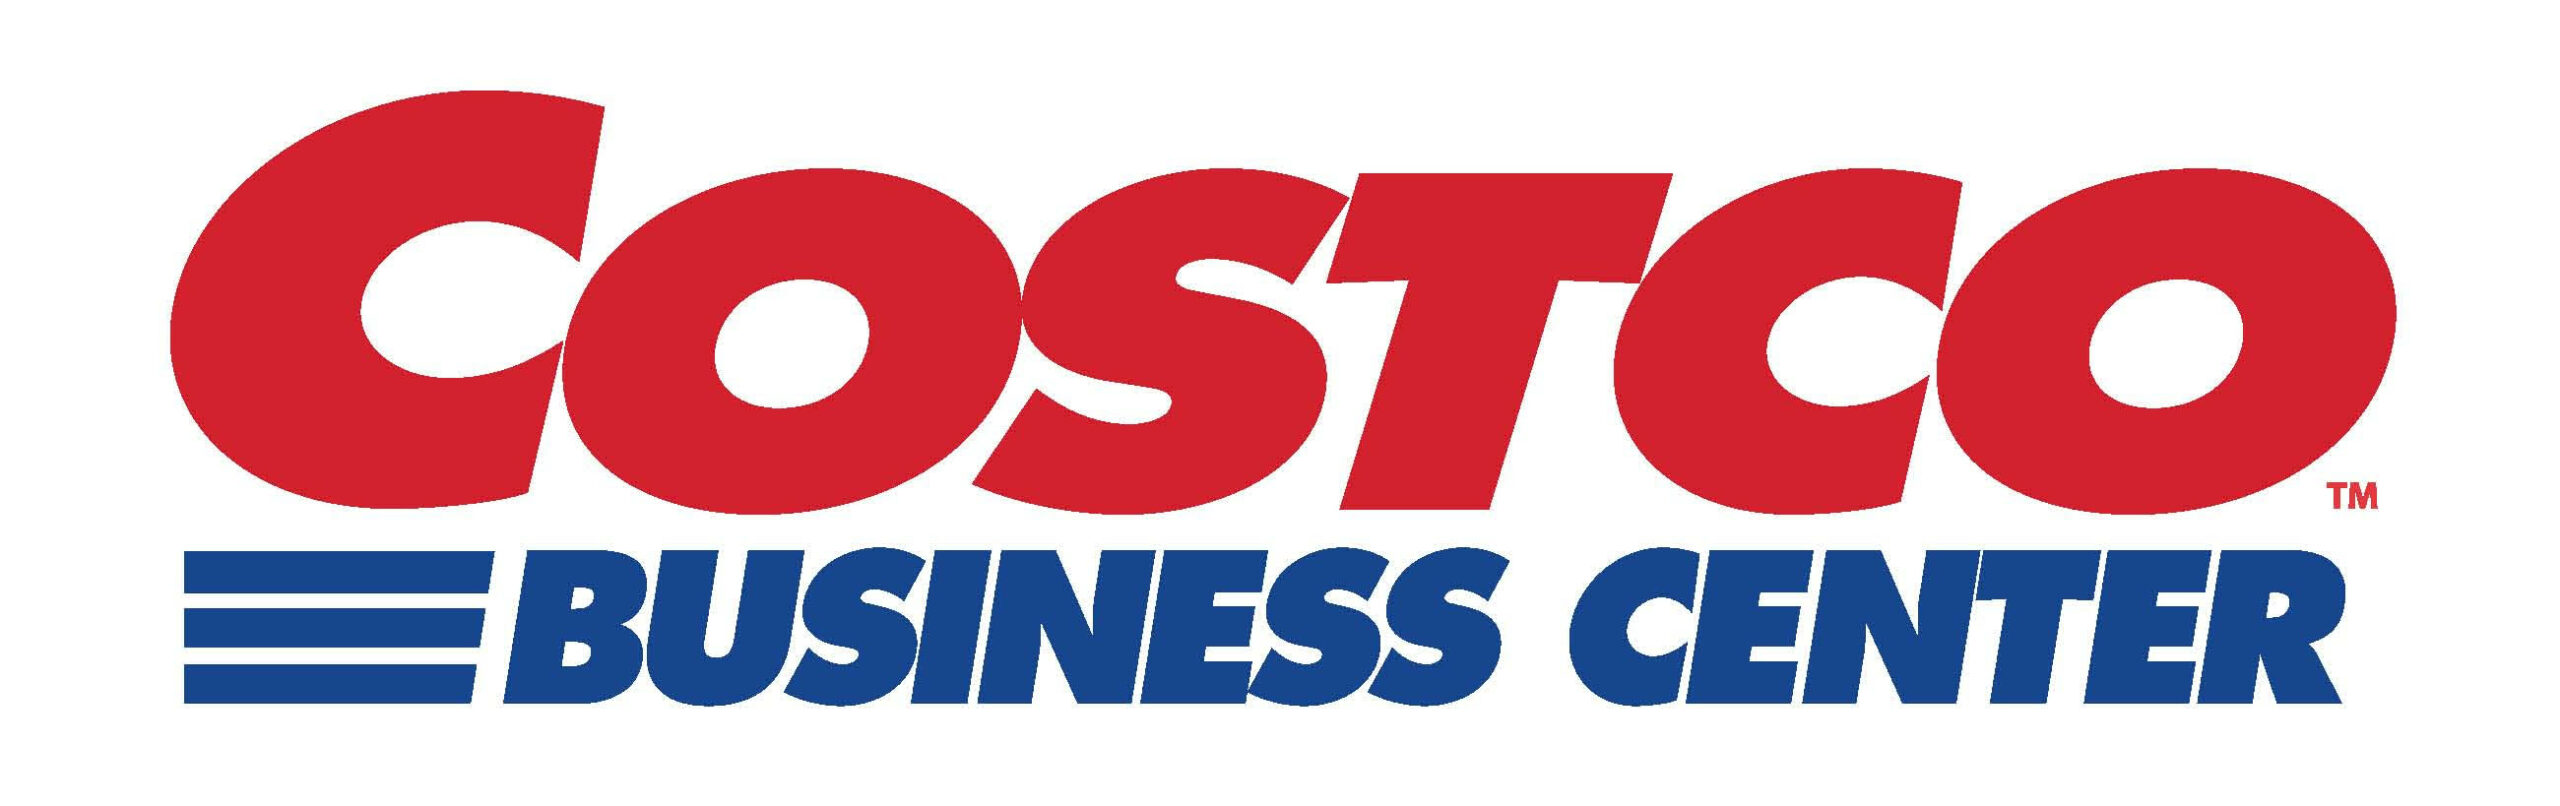 Costco Business Center - Morrow